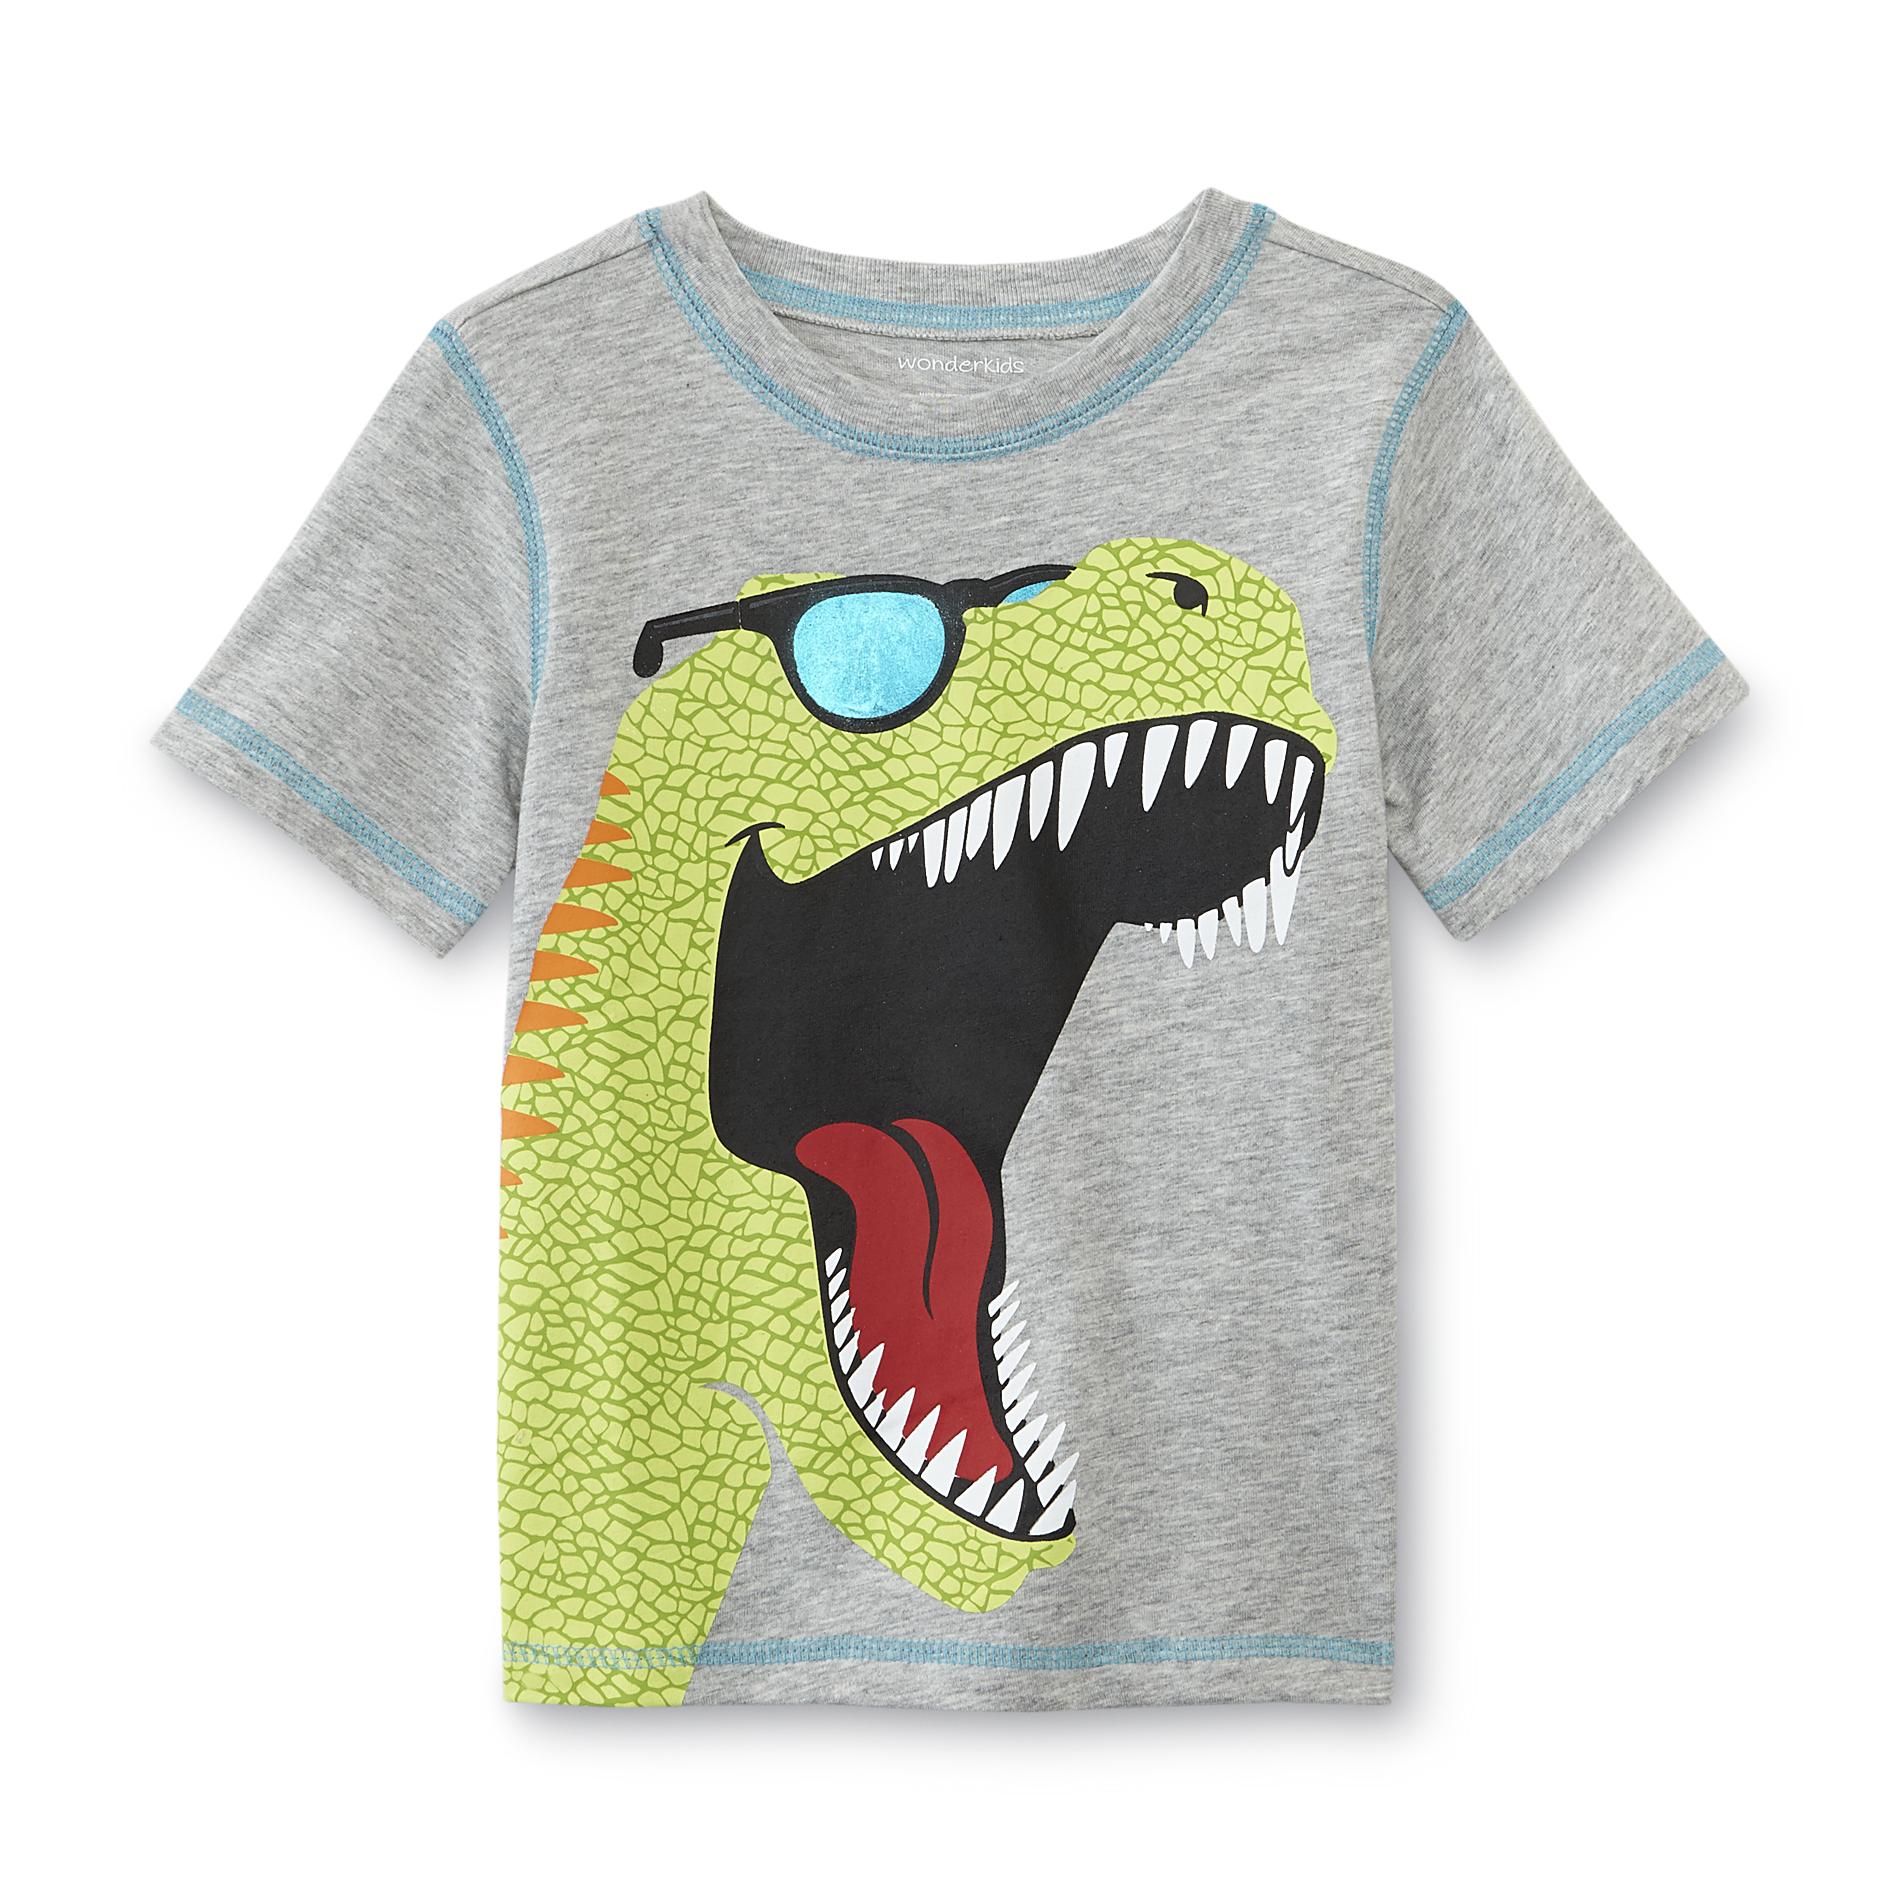 WonderKids Infant & Toddler Boy's Graphic T-Shirt - Laughing Dinosaur